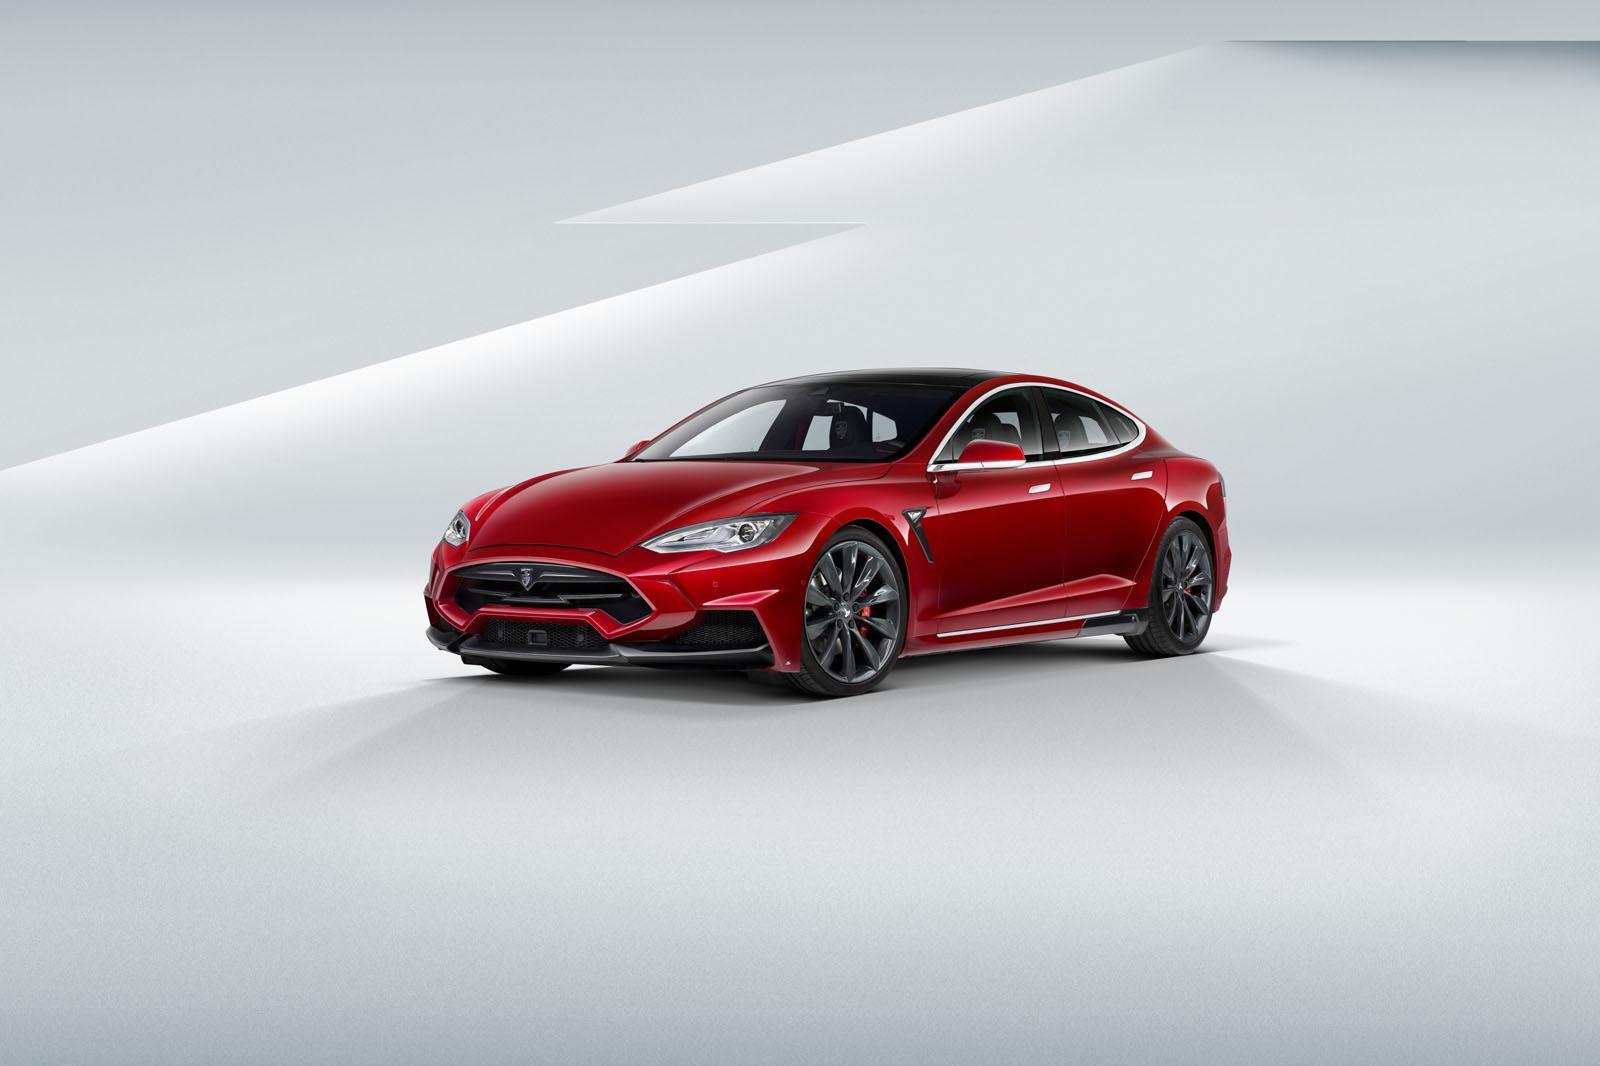 Tesla Model S Larte Design